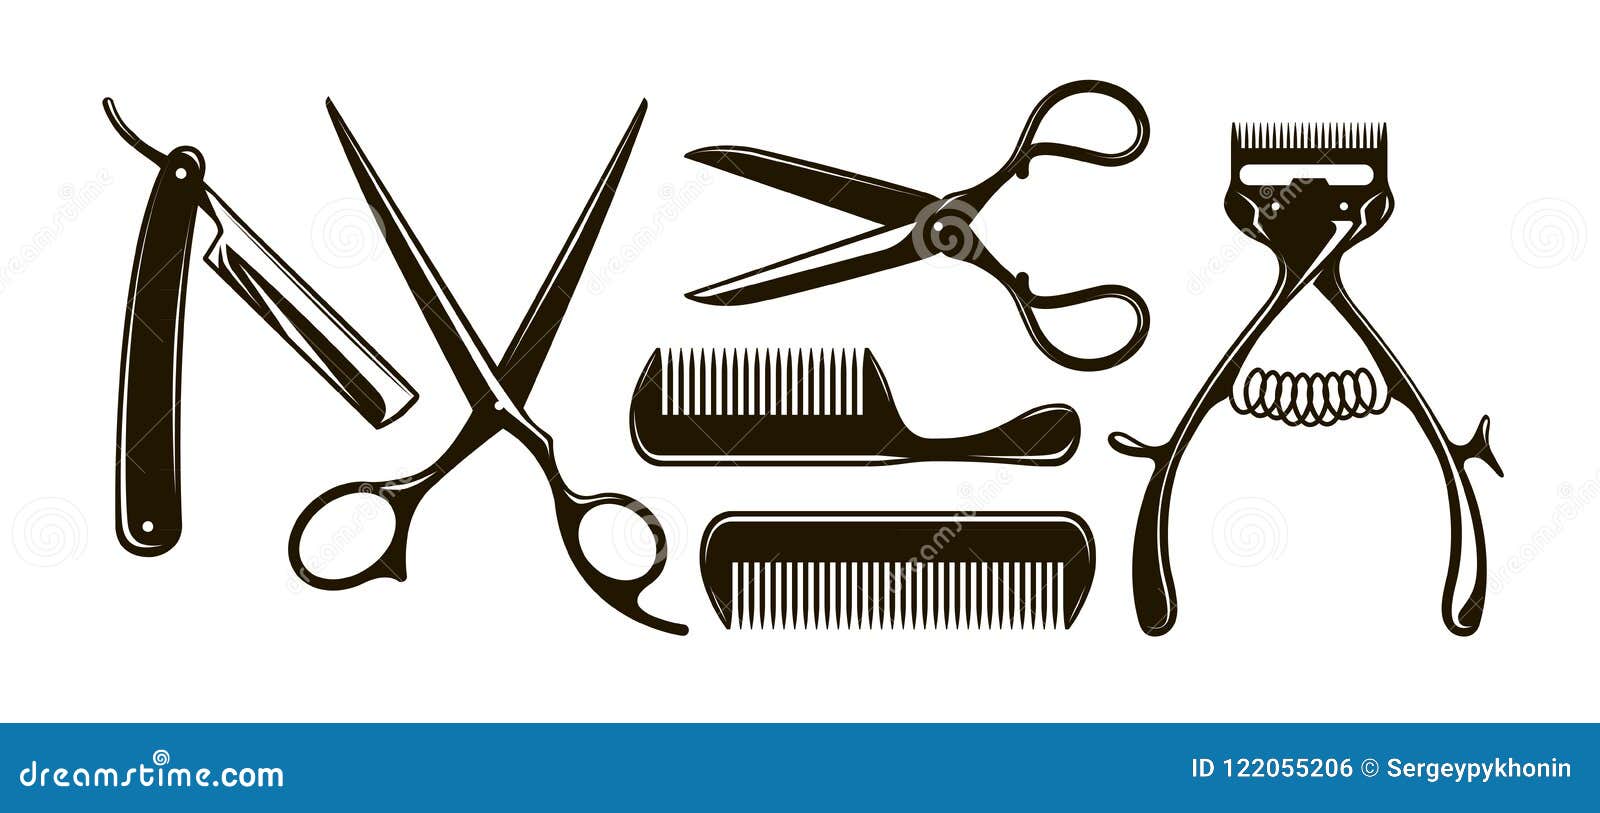 barbershop items such as scissors, comb, razor, mechanical hair clipper. retro  silhouettes